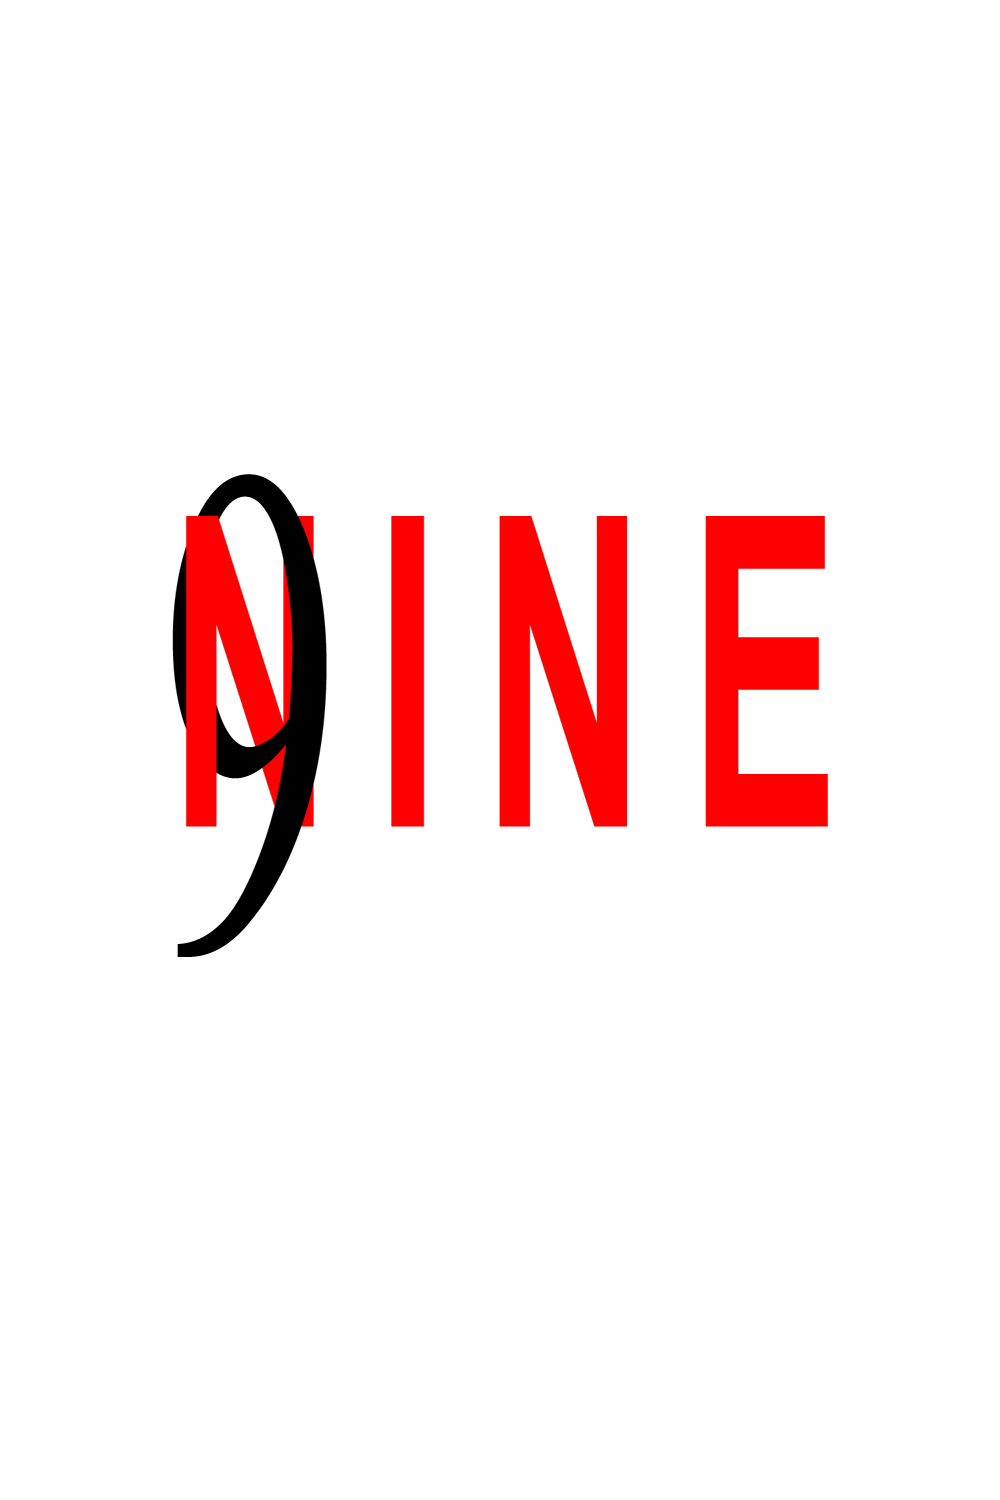 9 Nine Typographic - TShirt Design pinterest preview image.